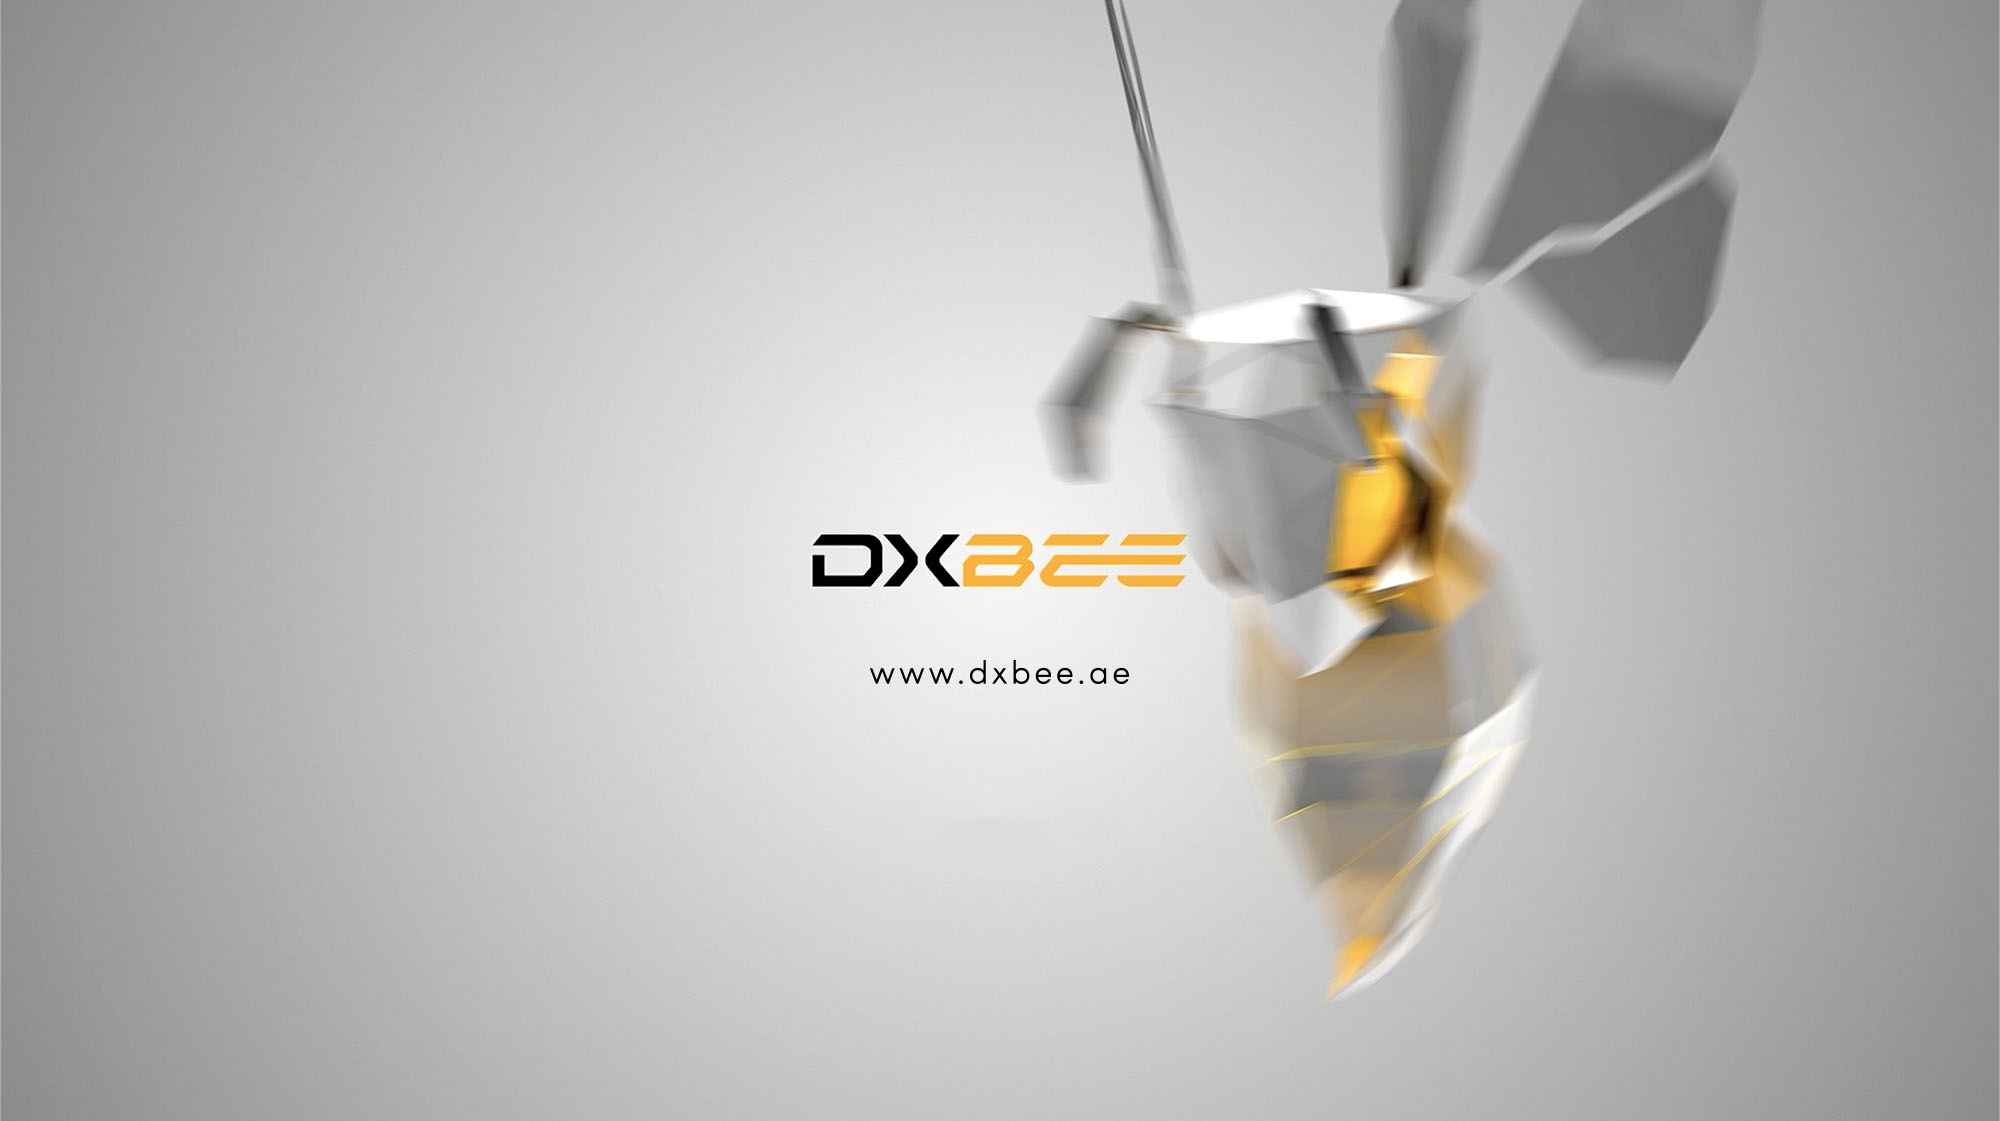 DXBee Media branding